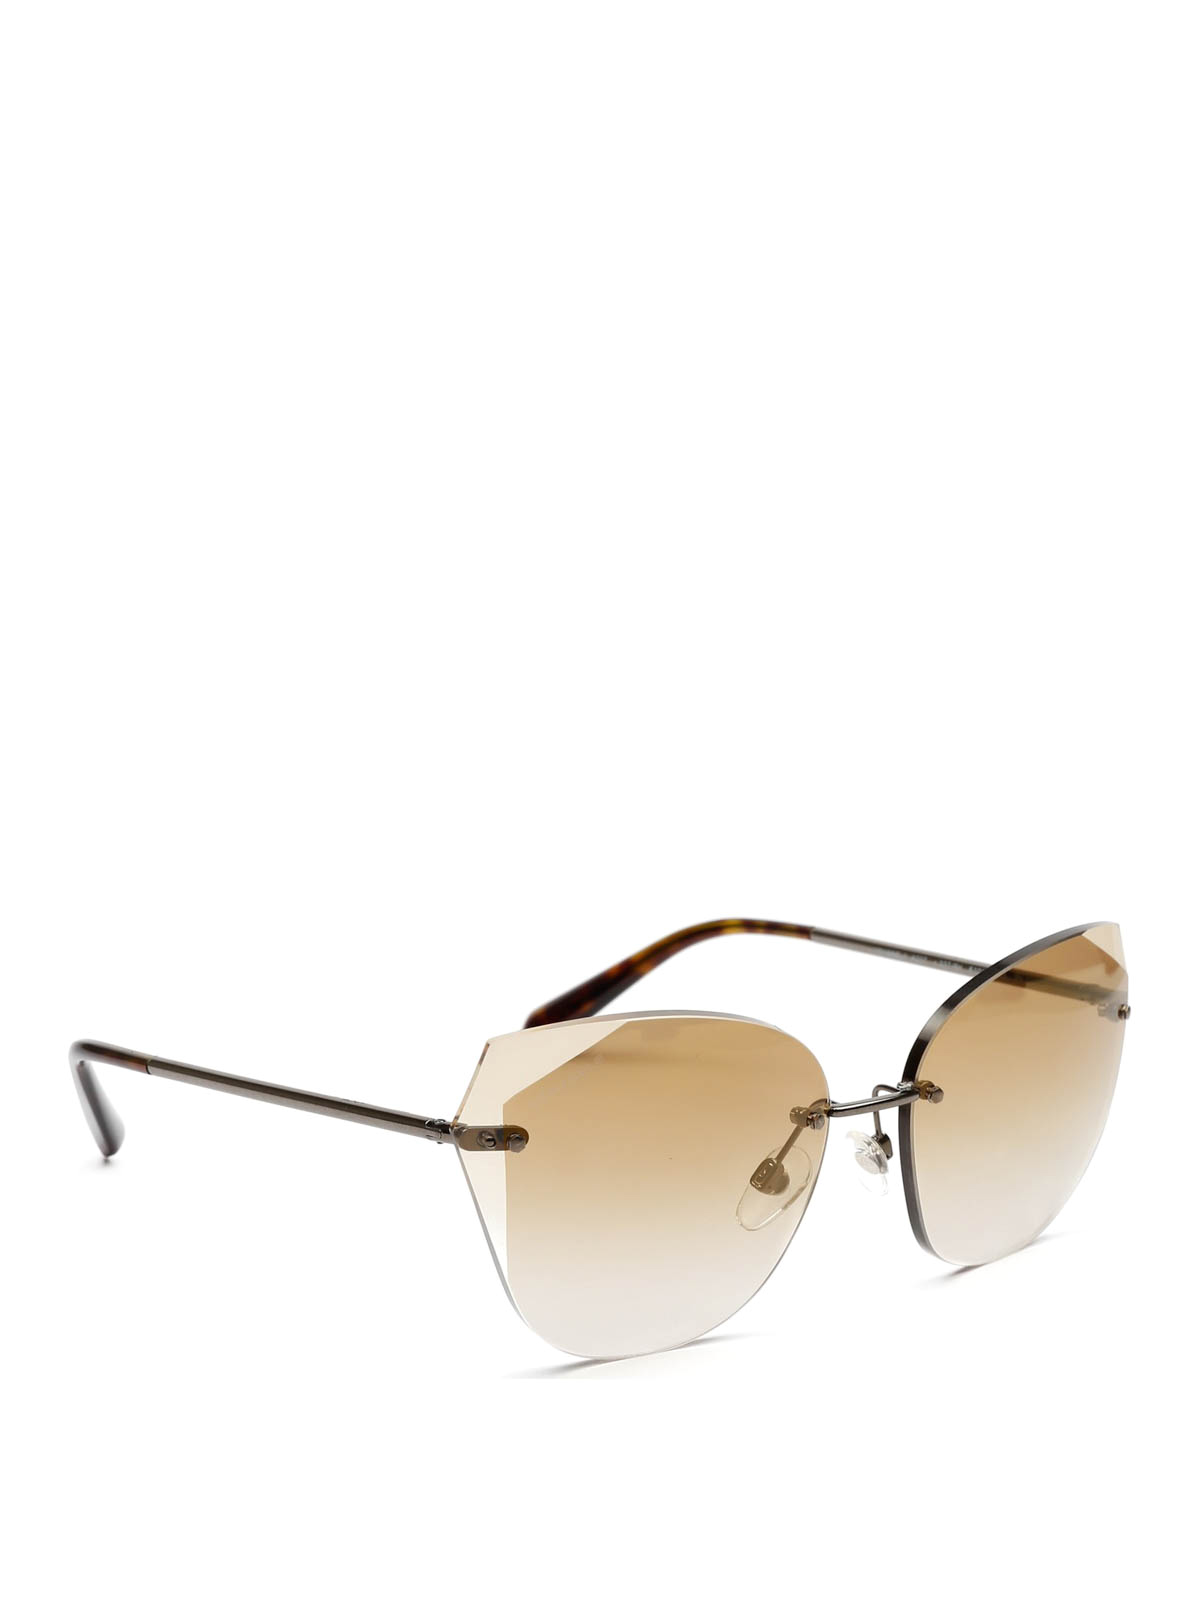 Sunglasses Chanel - Shaded lens sunglasses - 4237C3376H